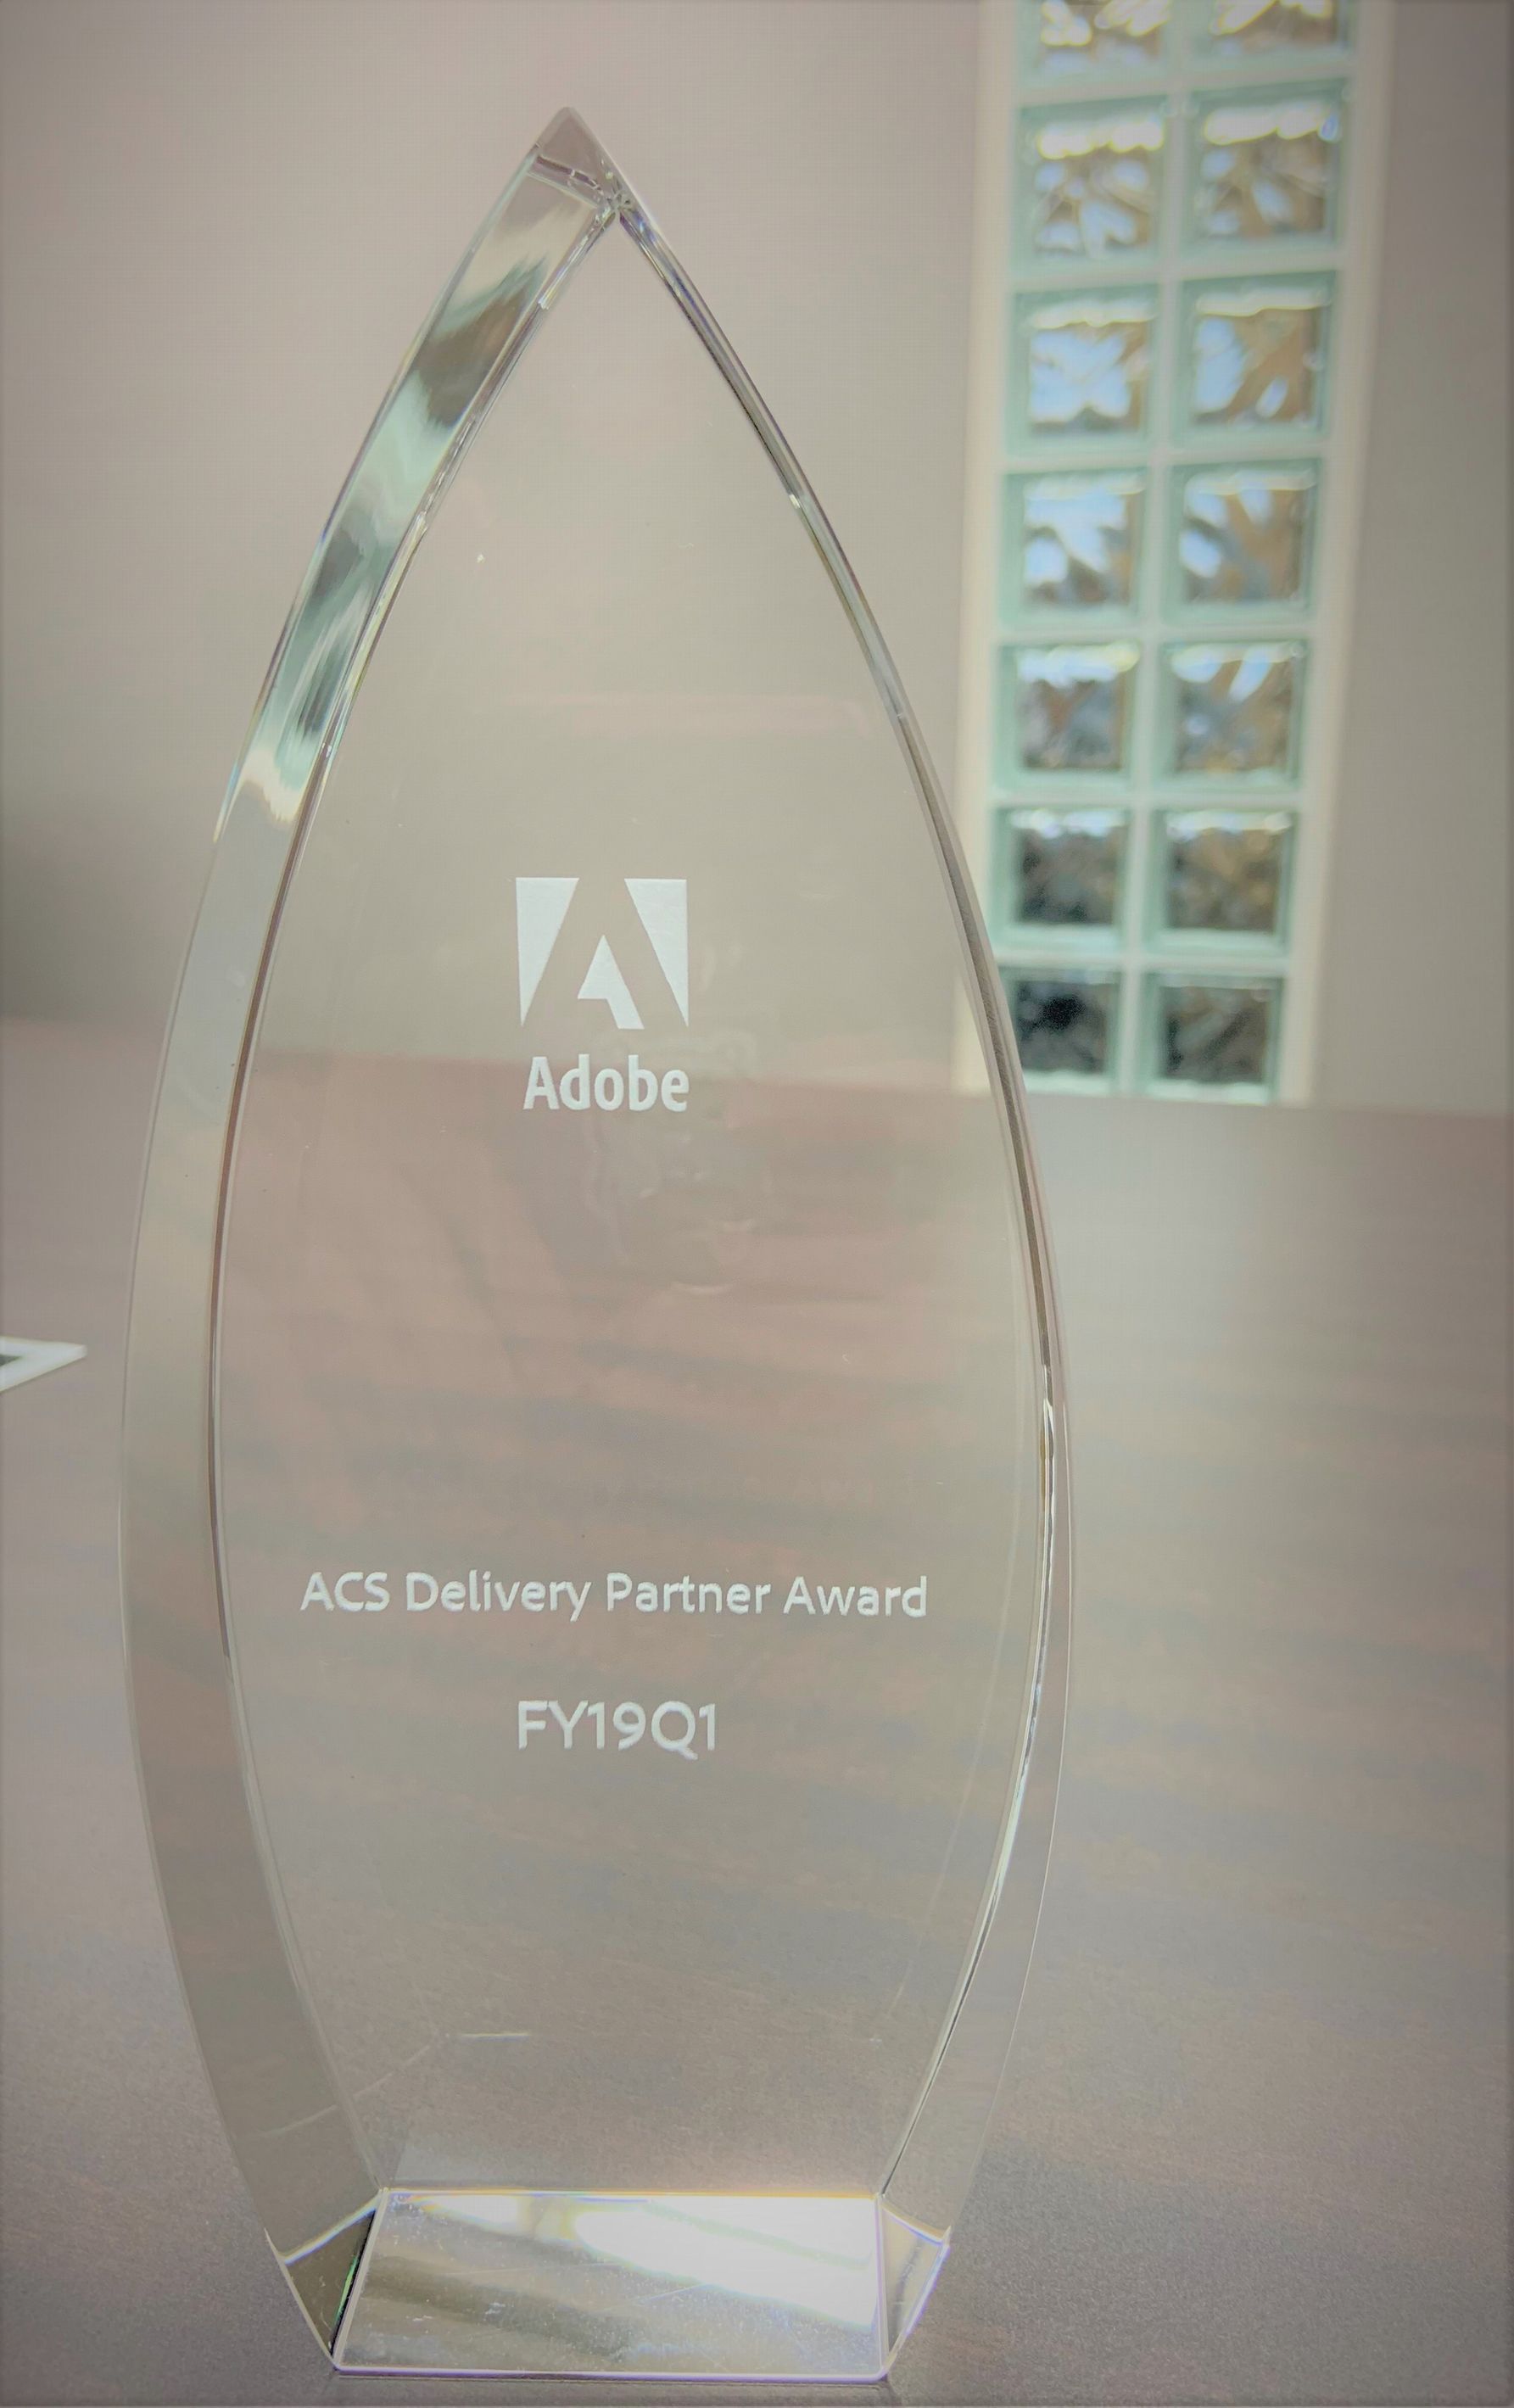 ACS Delivery Partner Award